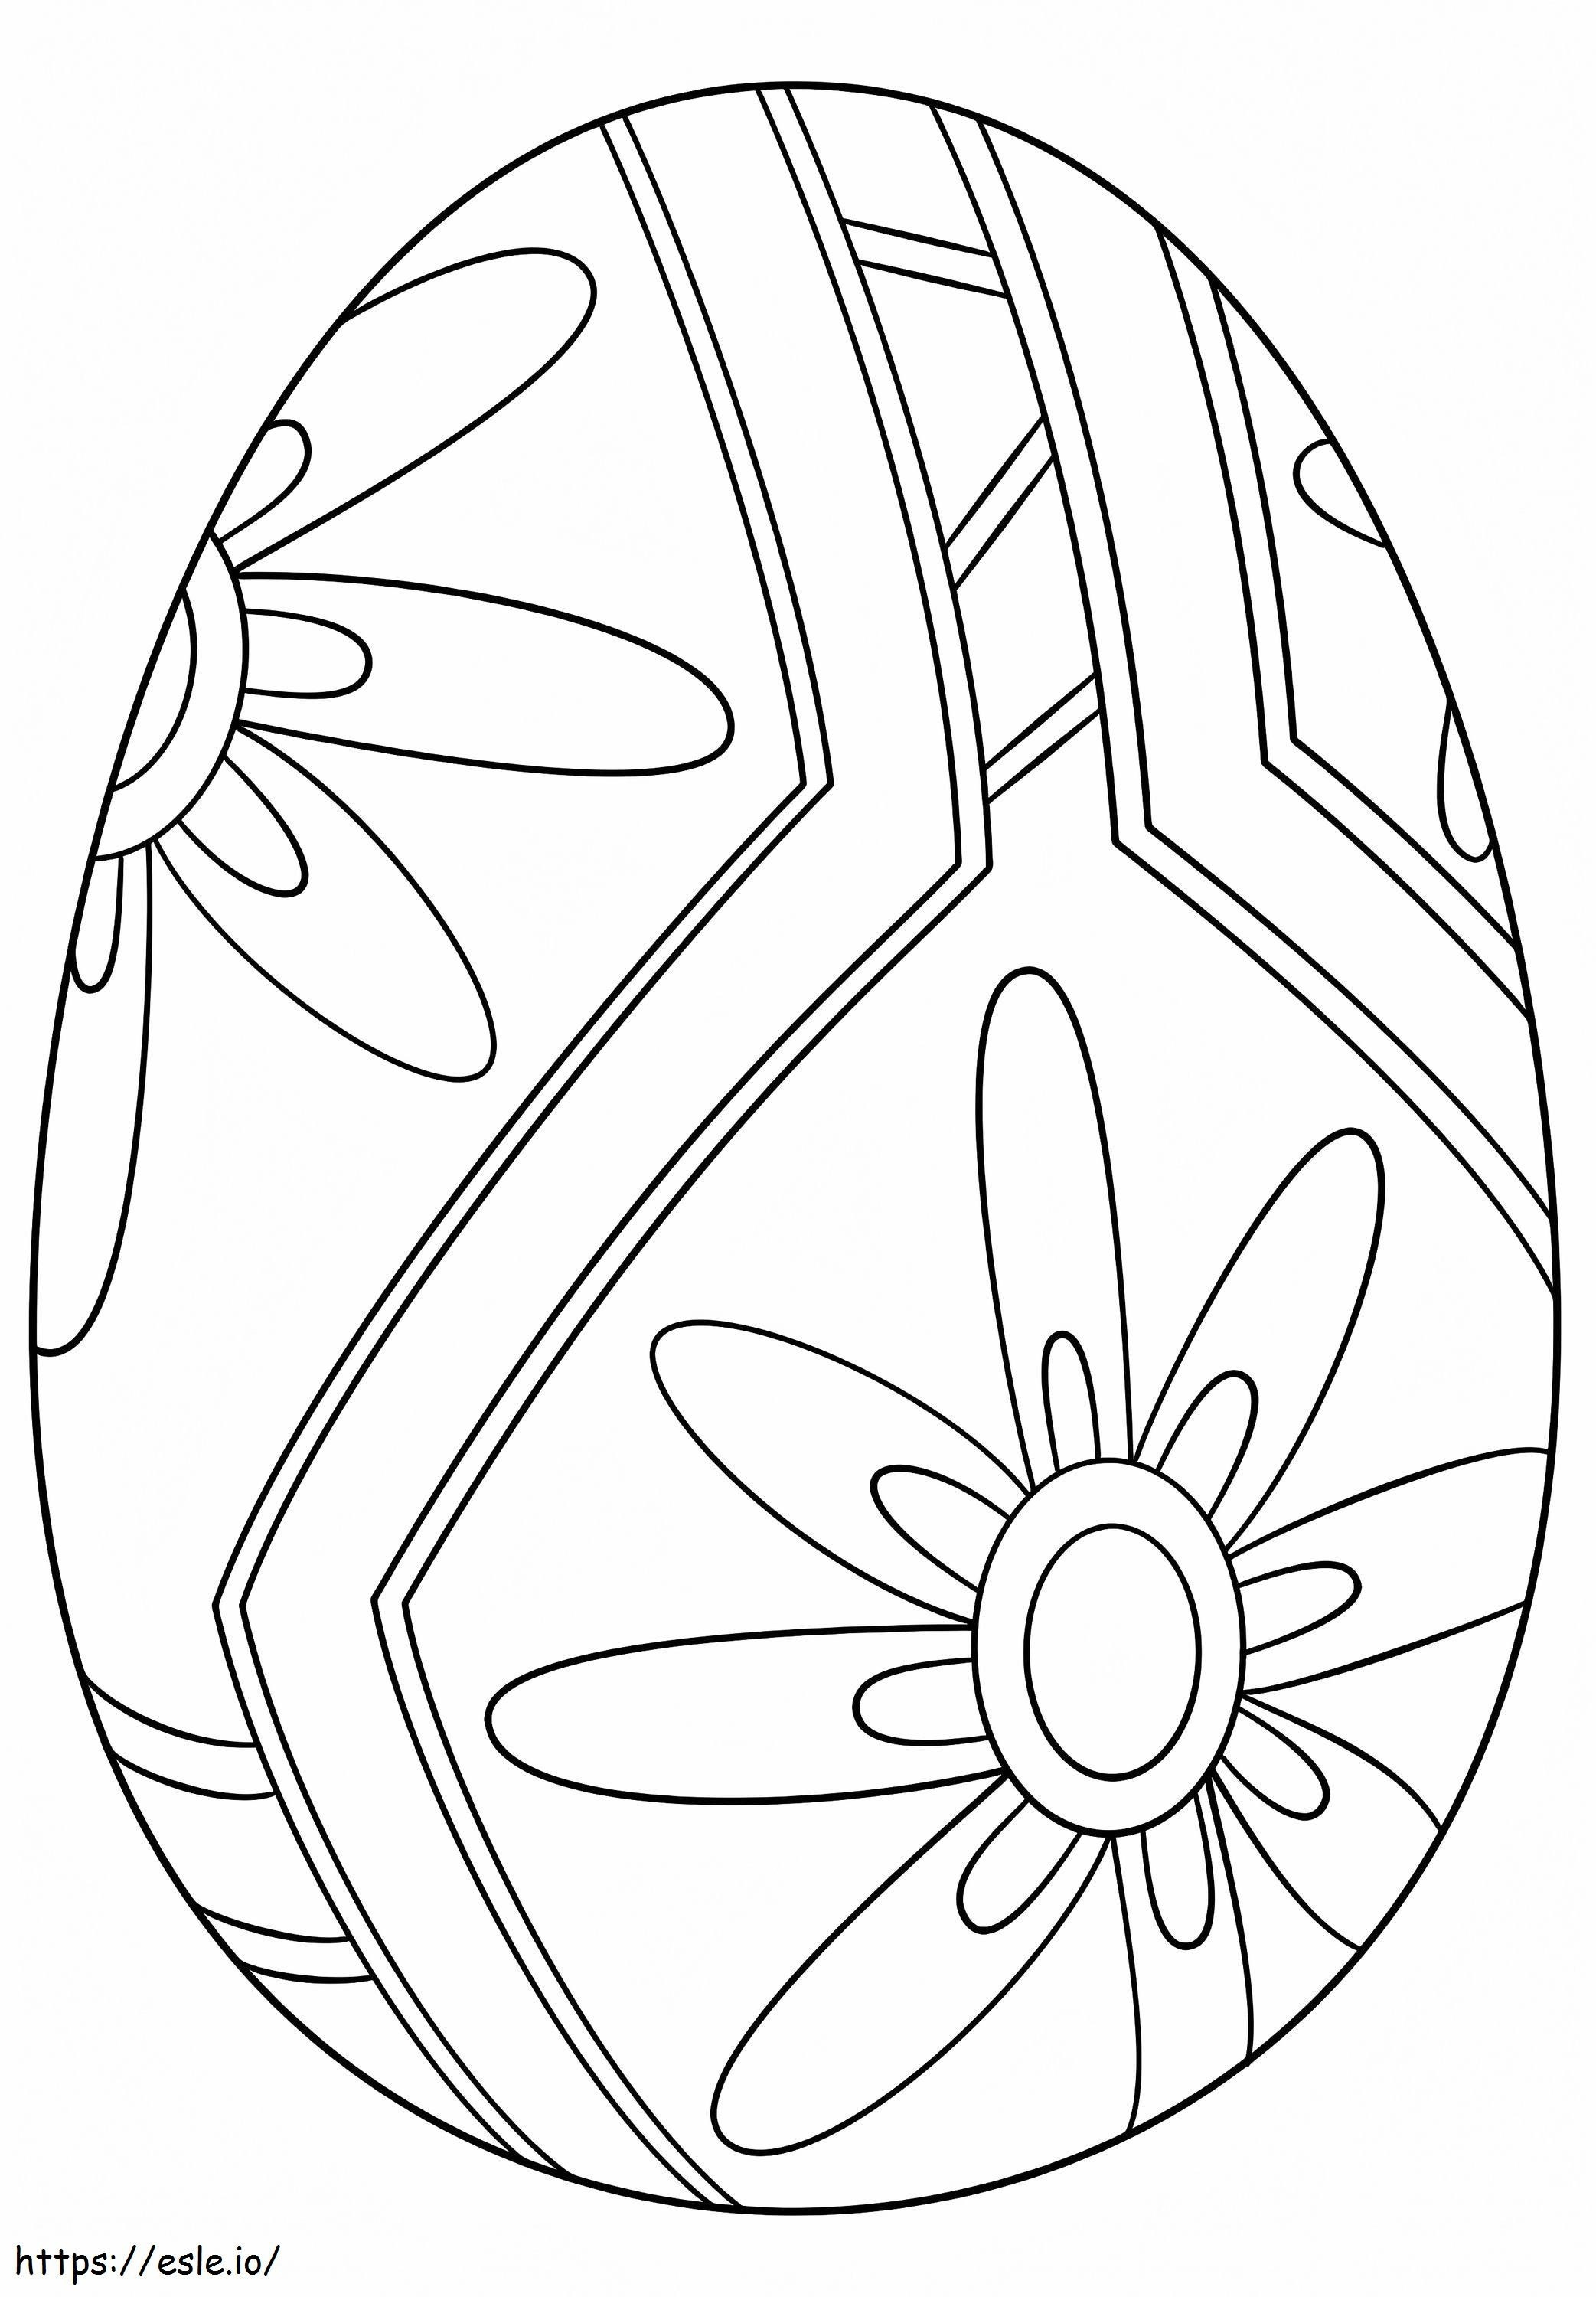 Coloriage Joli Oeuf de Pâques 3 à imprimer dessin